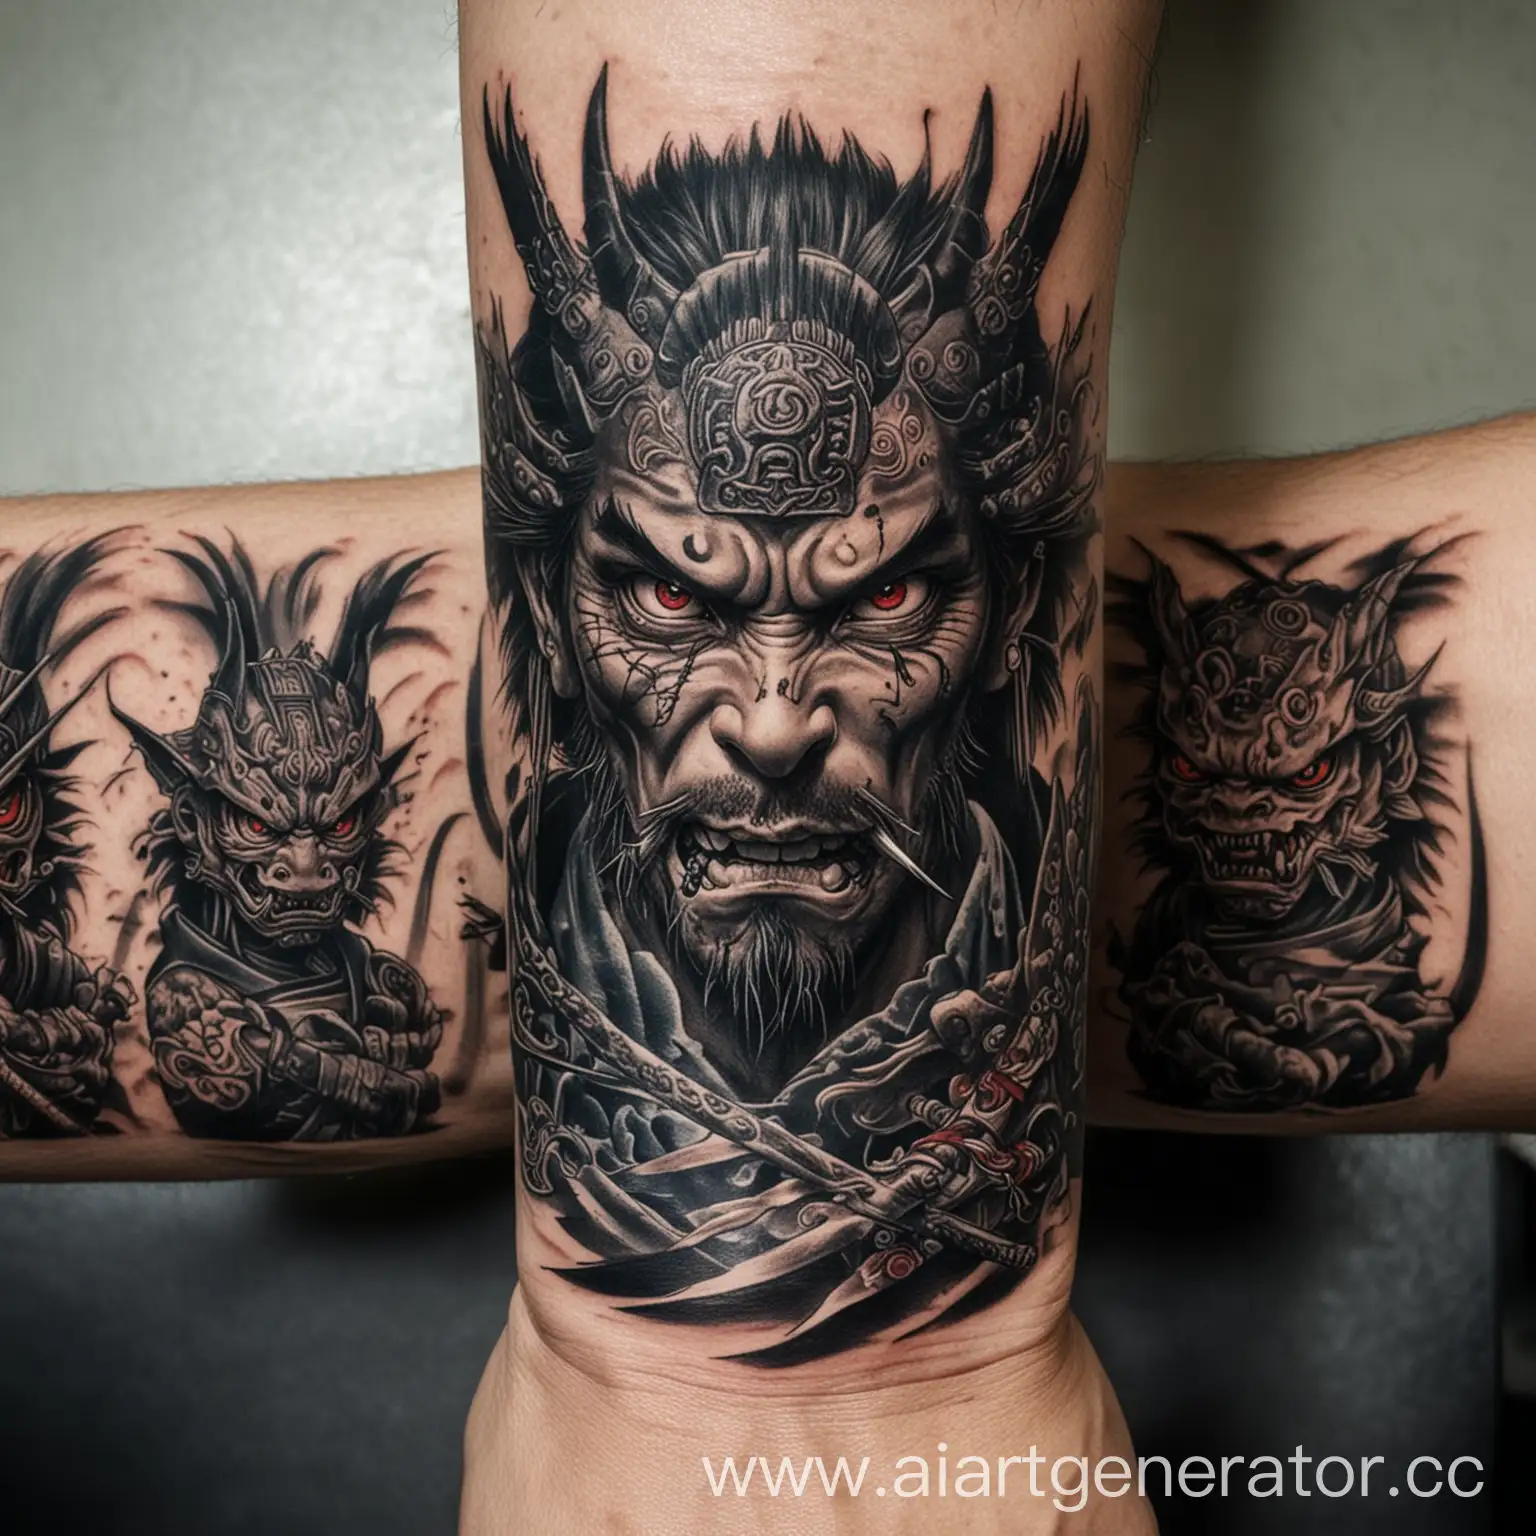 Samurai-Warrior-Confronts-Monstrous-Creature-with-Tattooed-Wrist